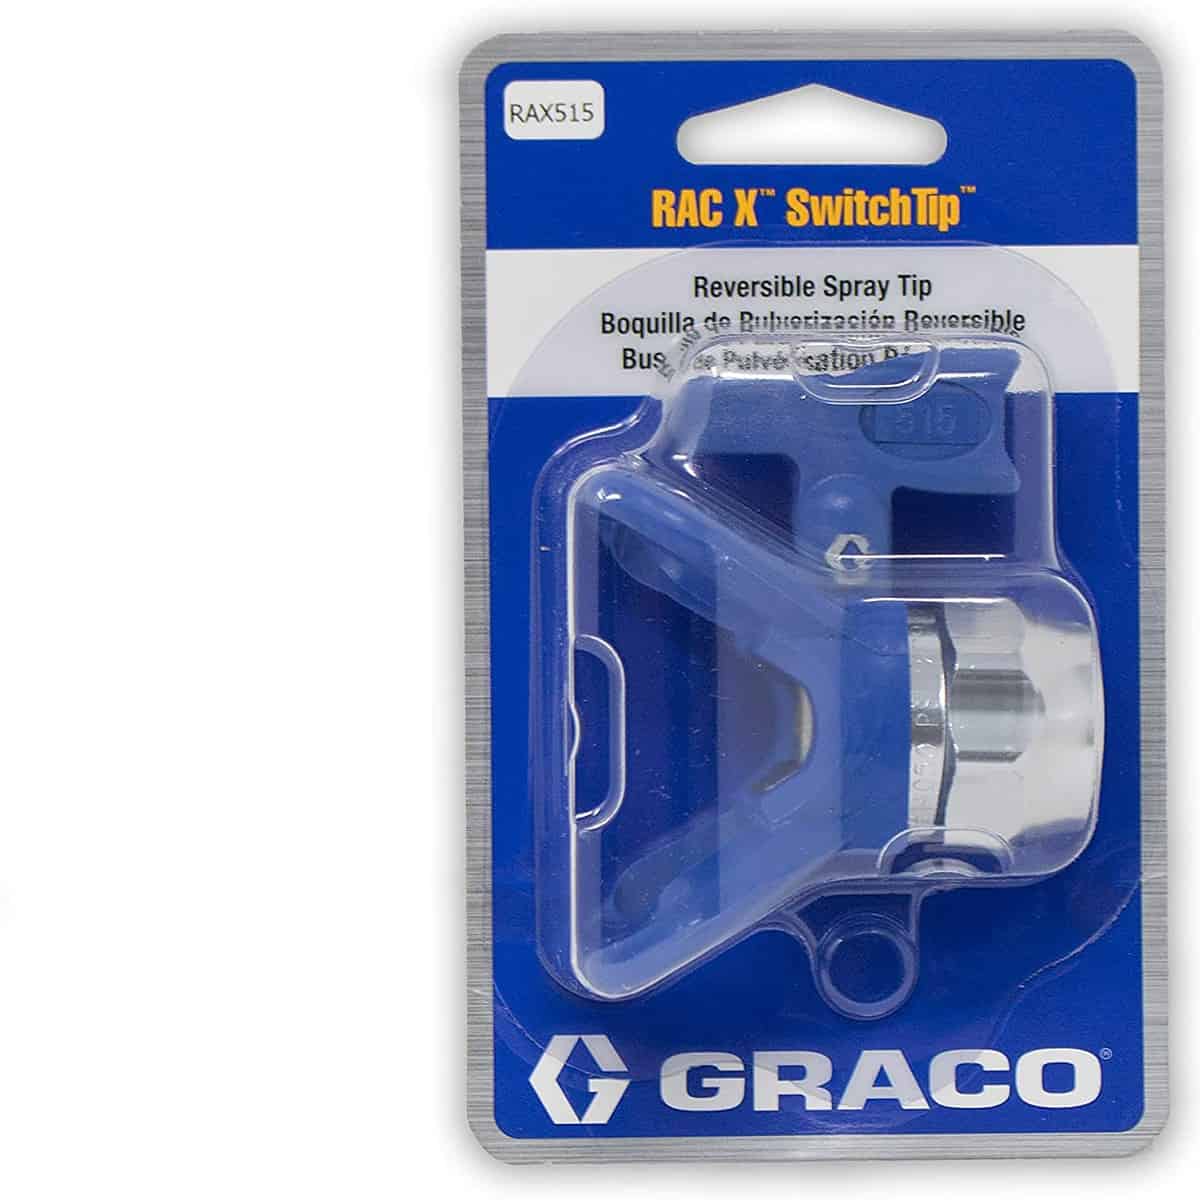 Graco RAX-515 Tip and guard